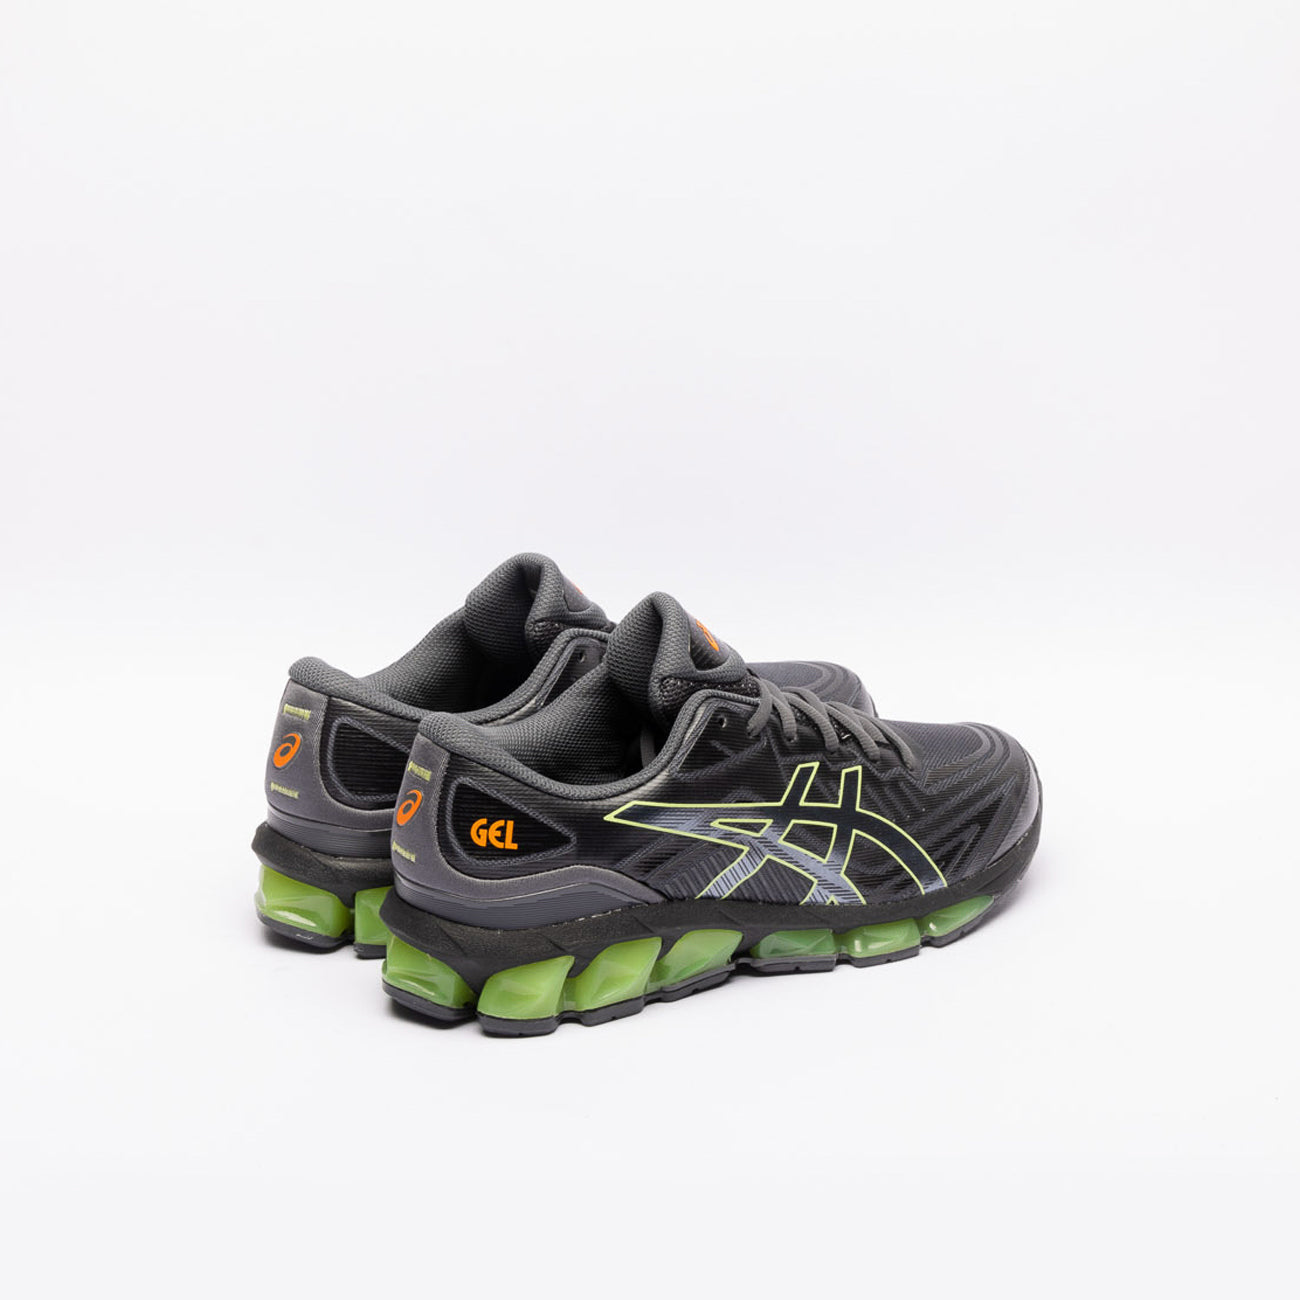 Asics Gel Quantum 360 VII black fabric and lime green gel running sneaker